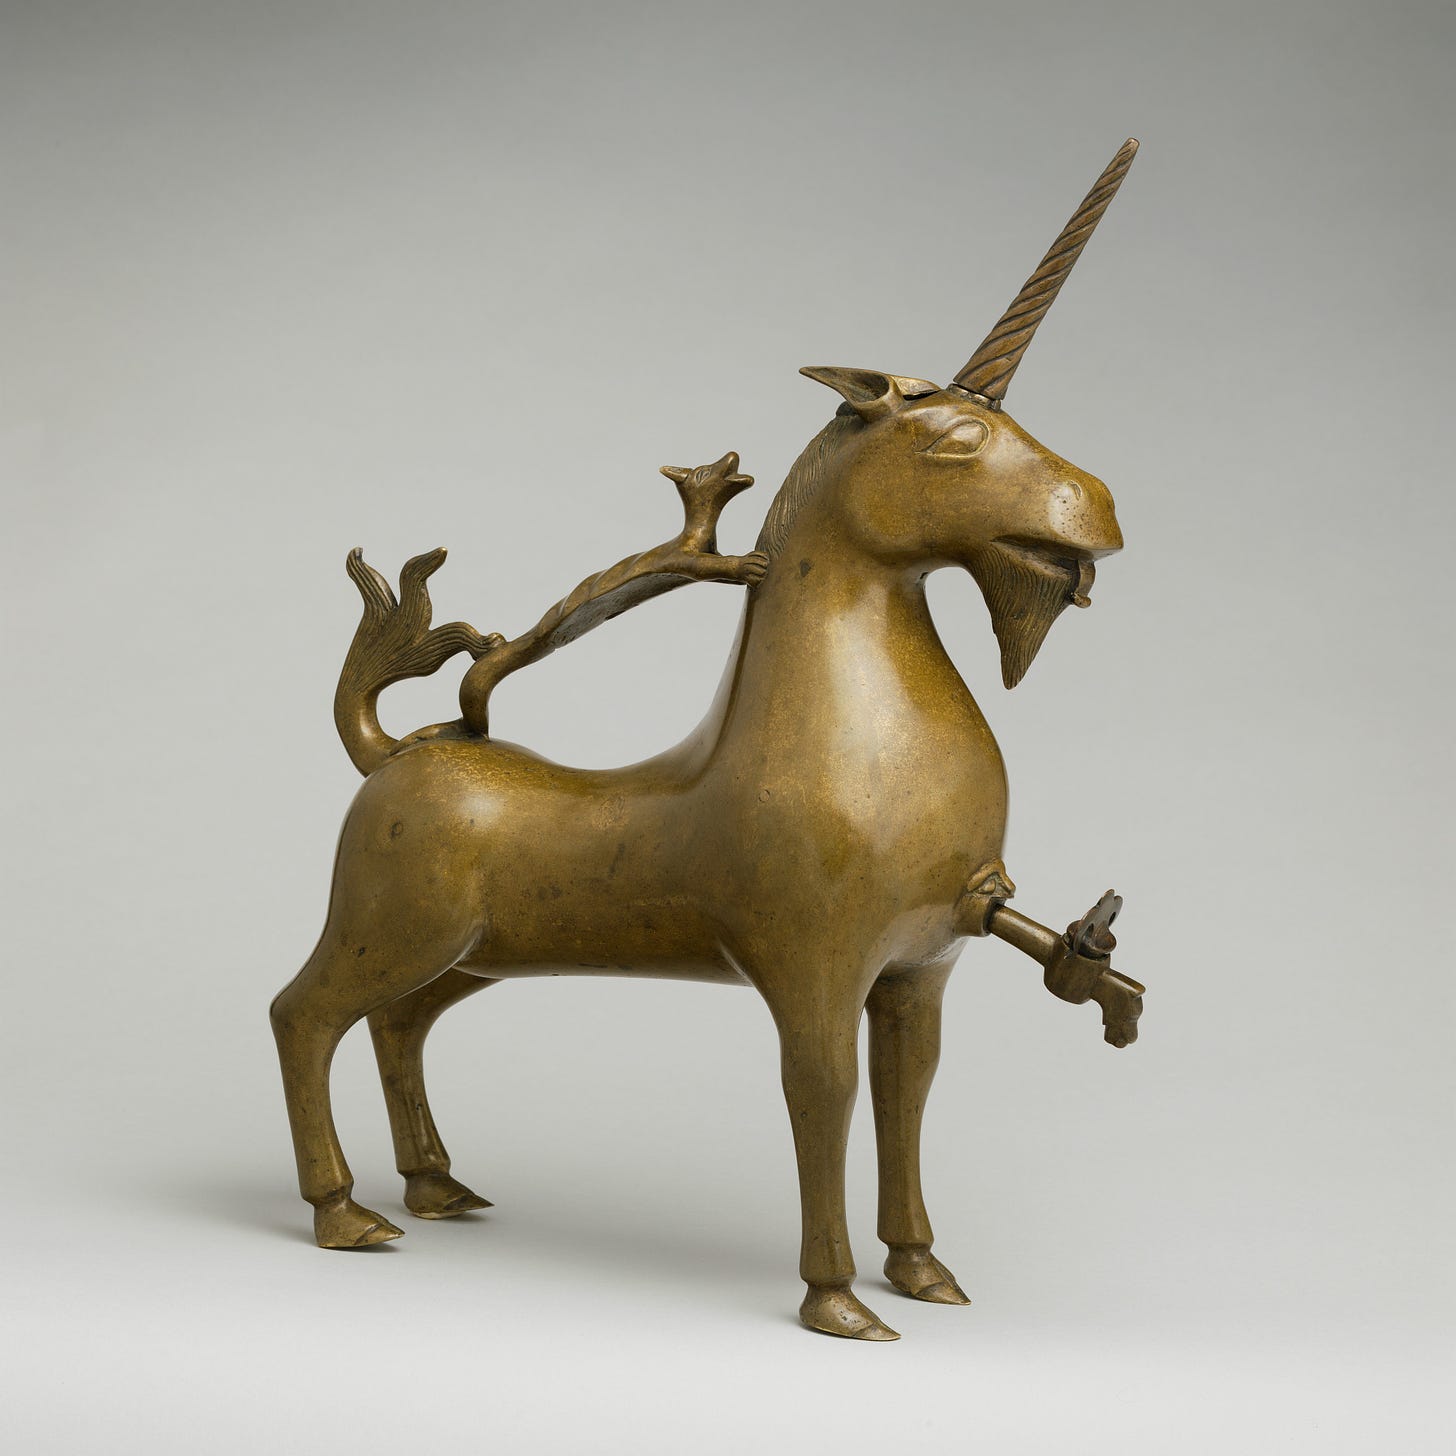 Metal sculpture of unicorn